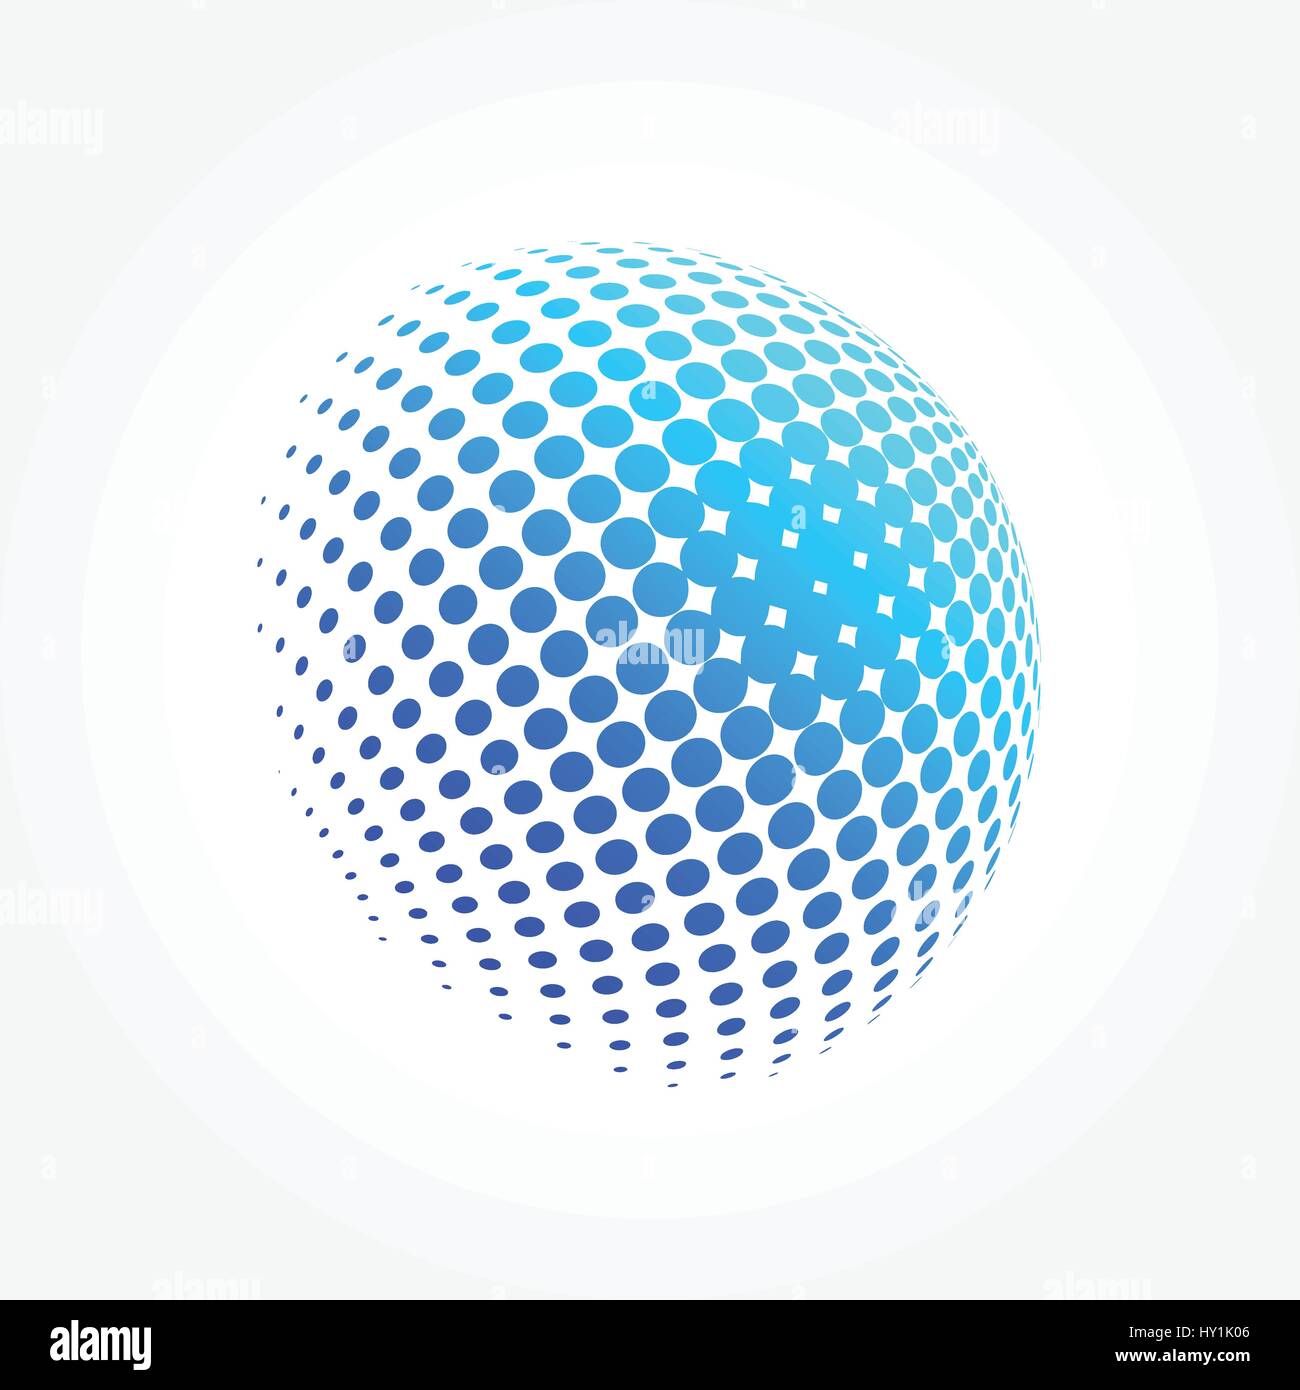 Stilisierte Weltkugel mit Dots Pixel Stock Vektor